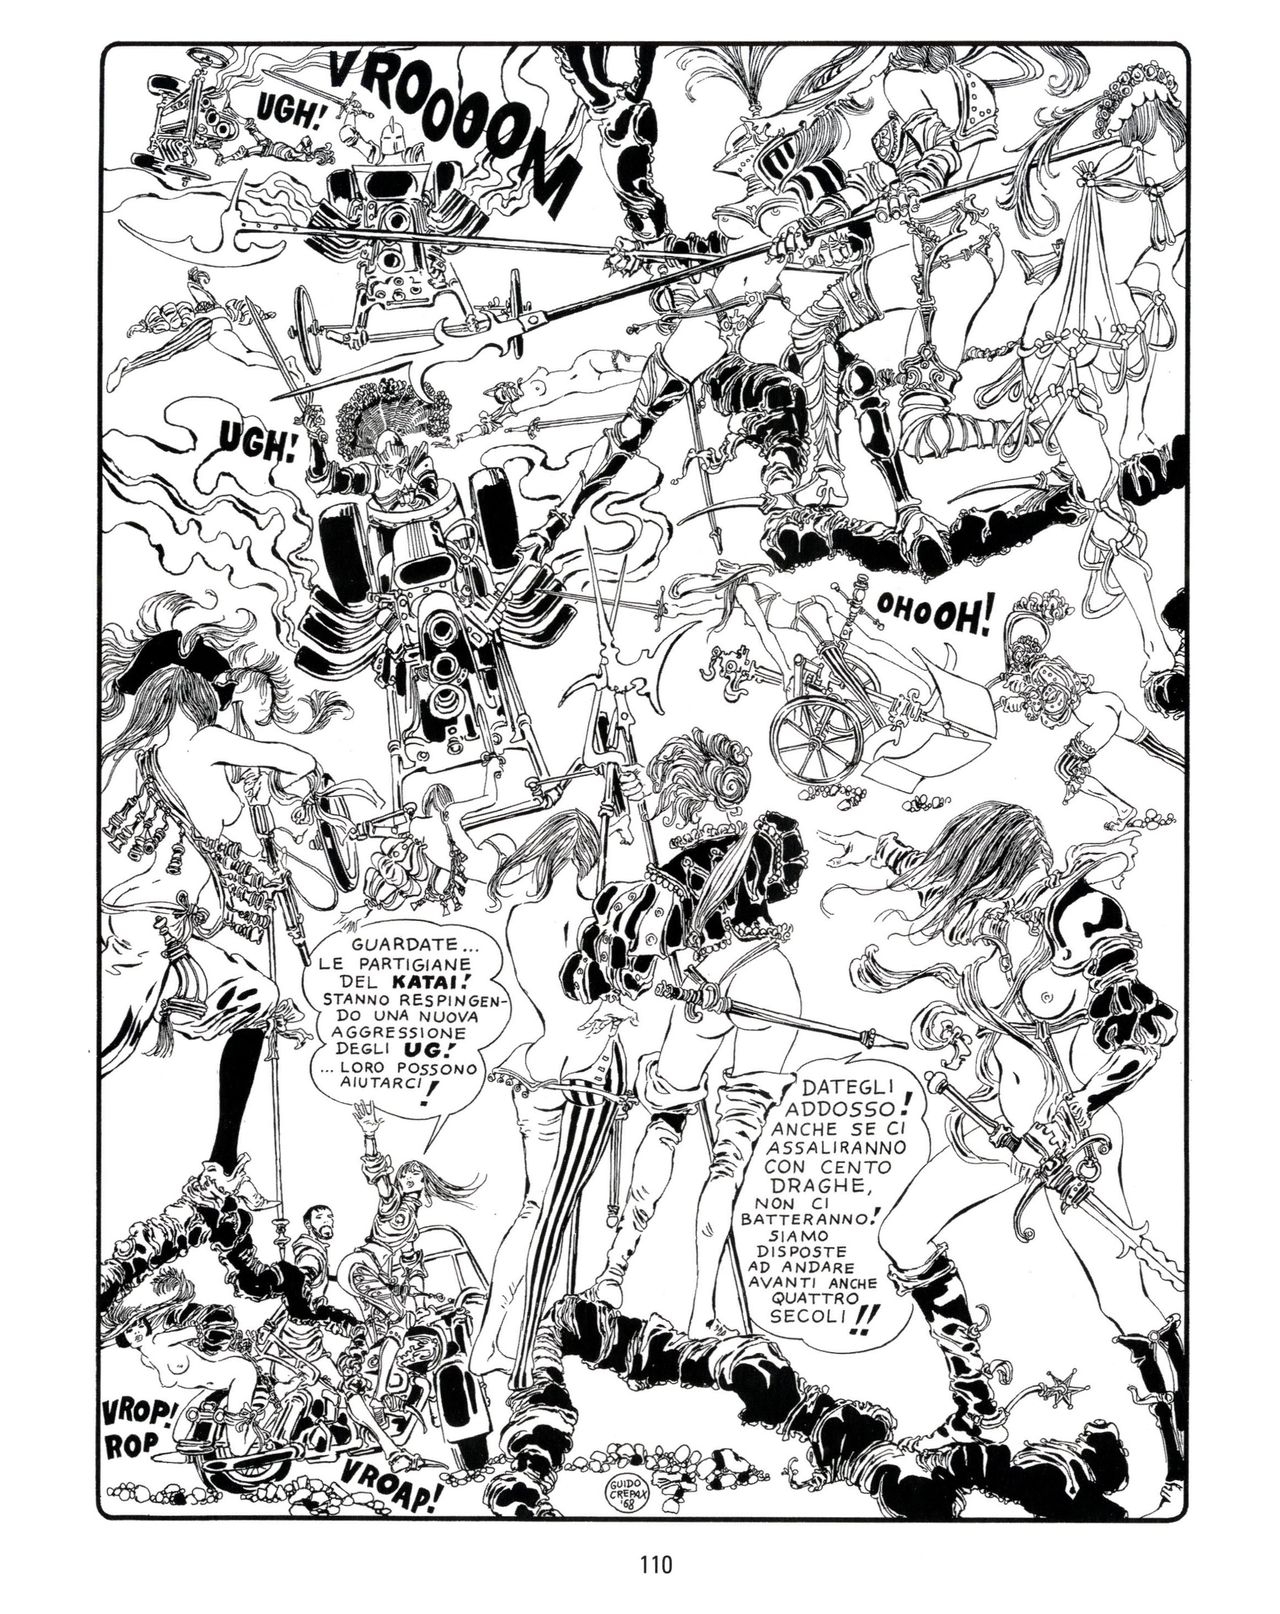 [Guido Crepax] Erotica Fumetti #25 : L'ascesa dei sotterranei : I cavalieri ciechi [Italian] 111